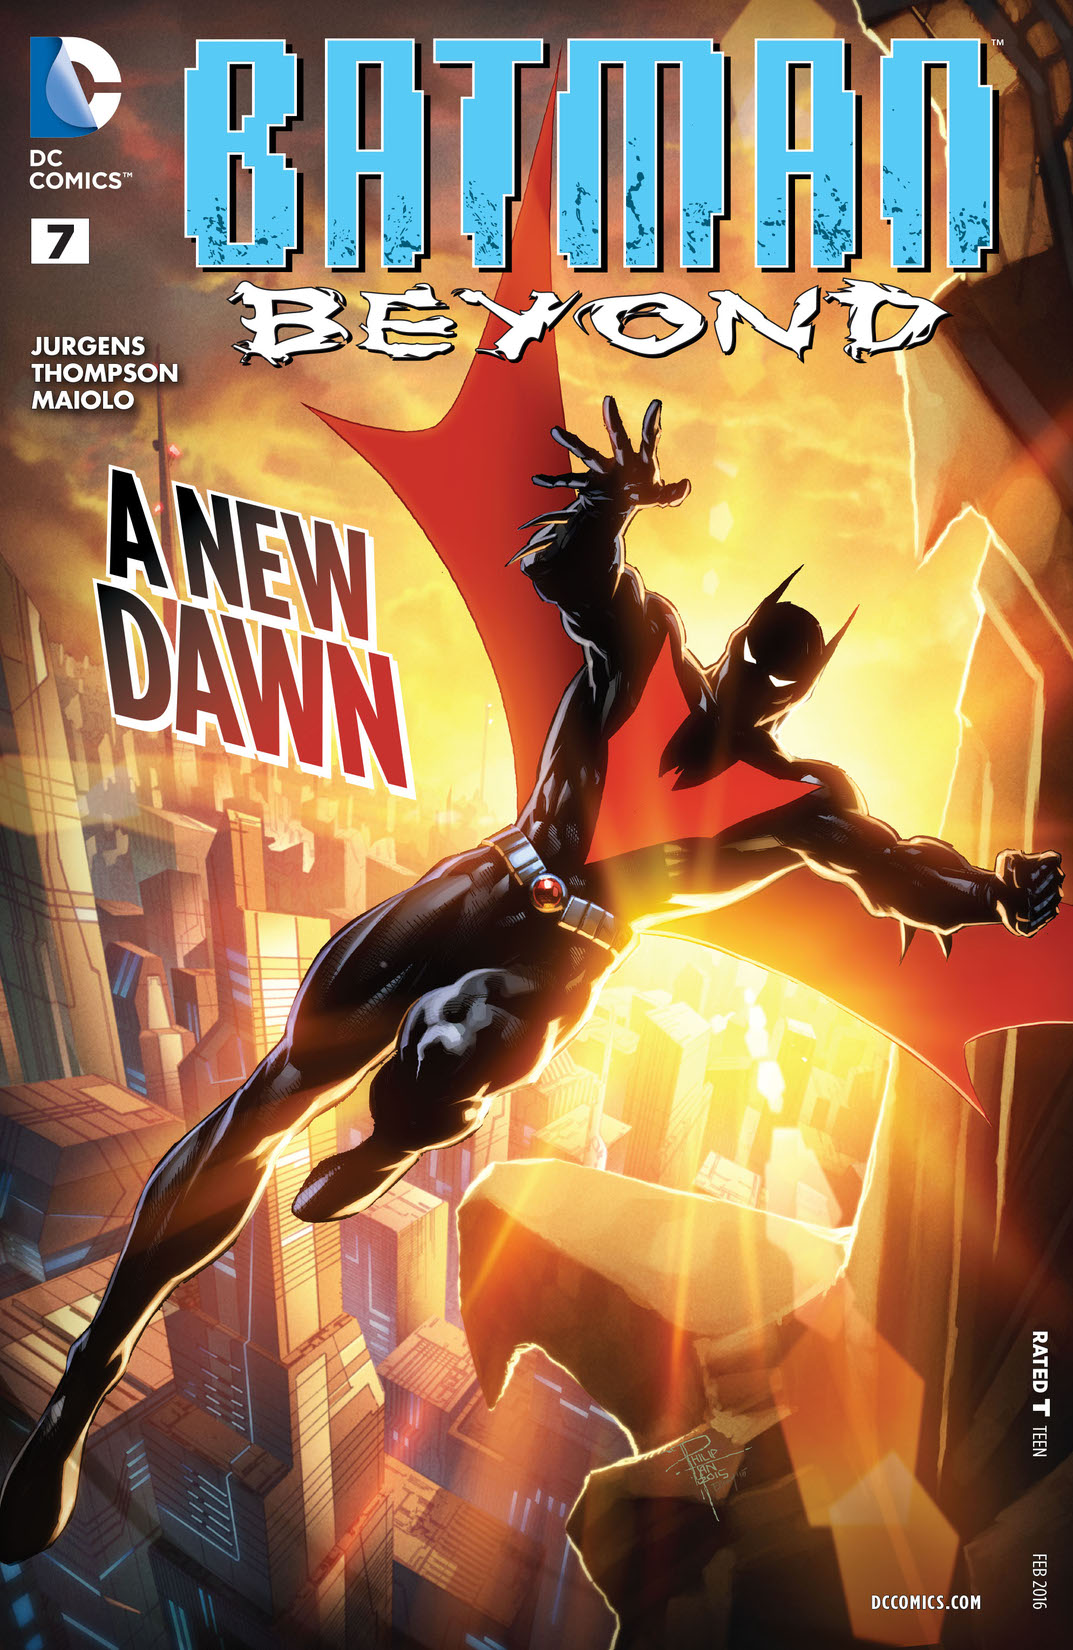 Batman Beyond (2015-) #7 preview images